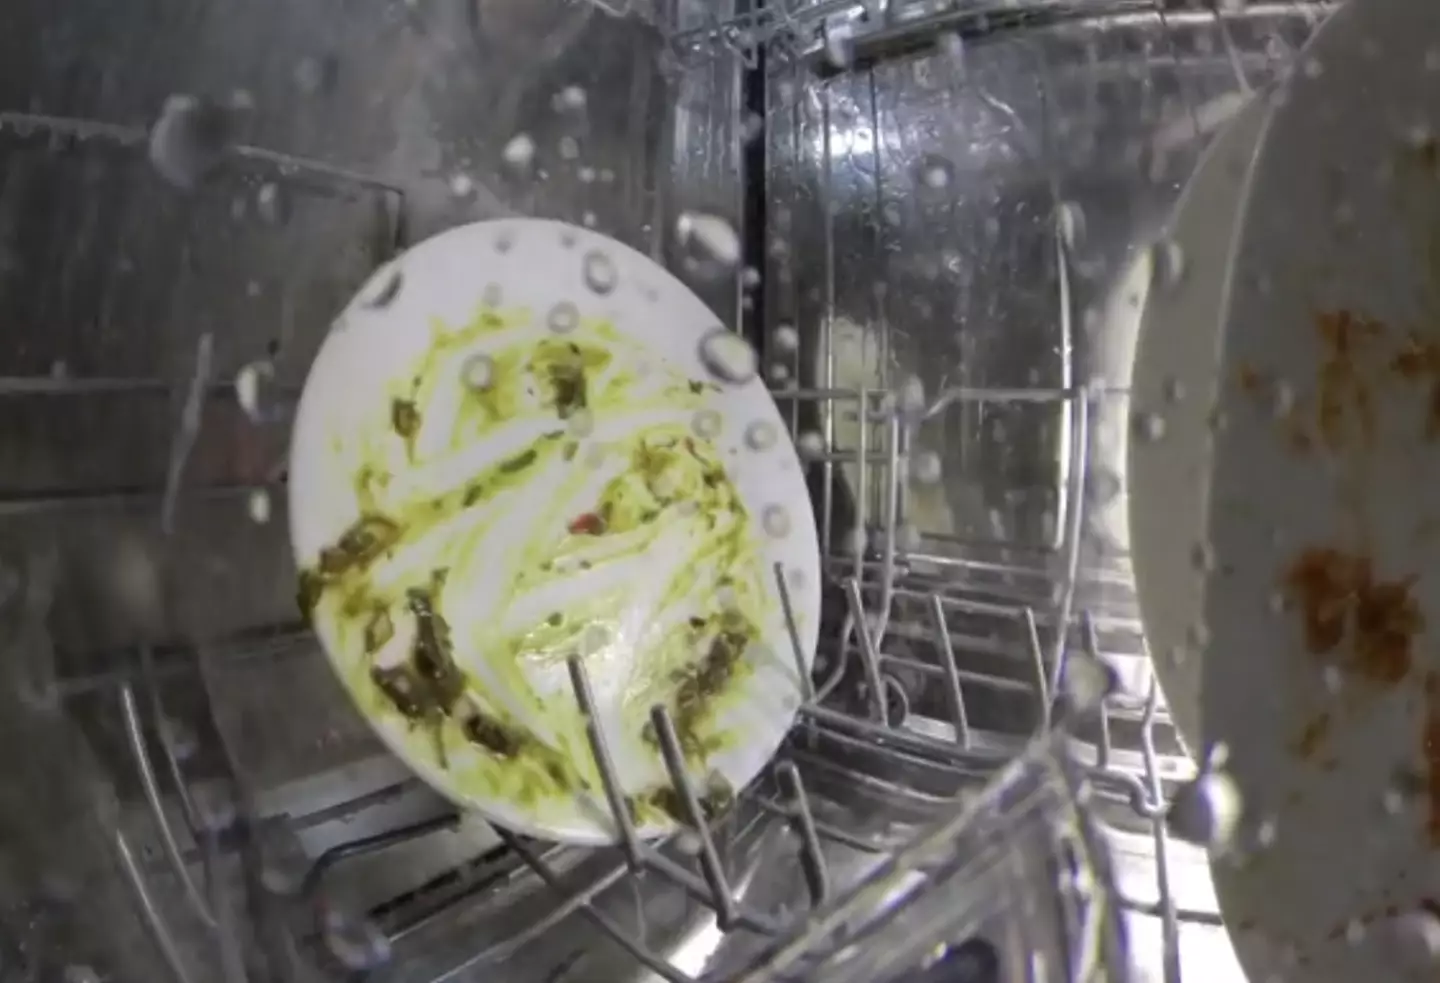 The dishwasher video caused a stir on TikTok.